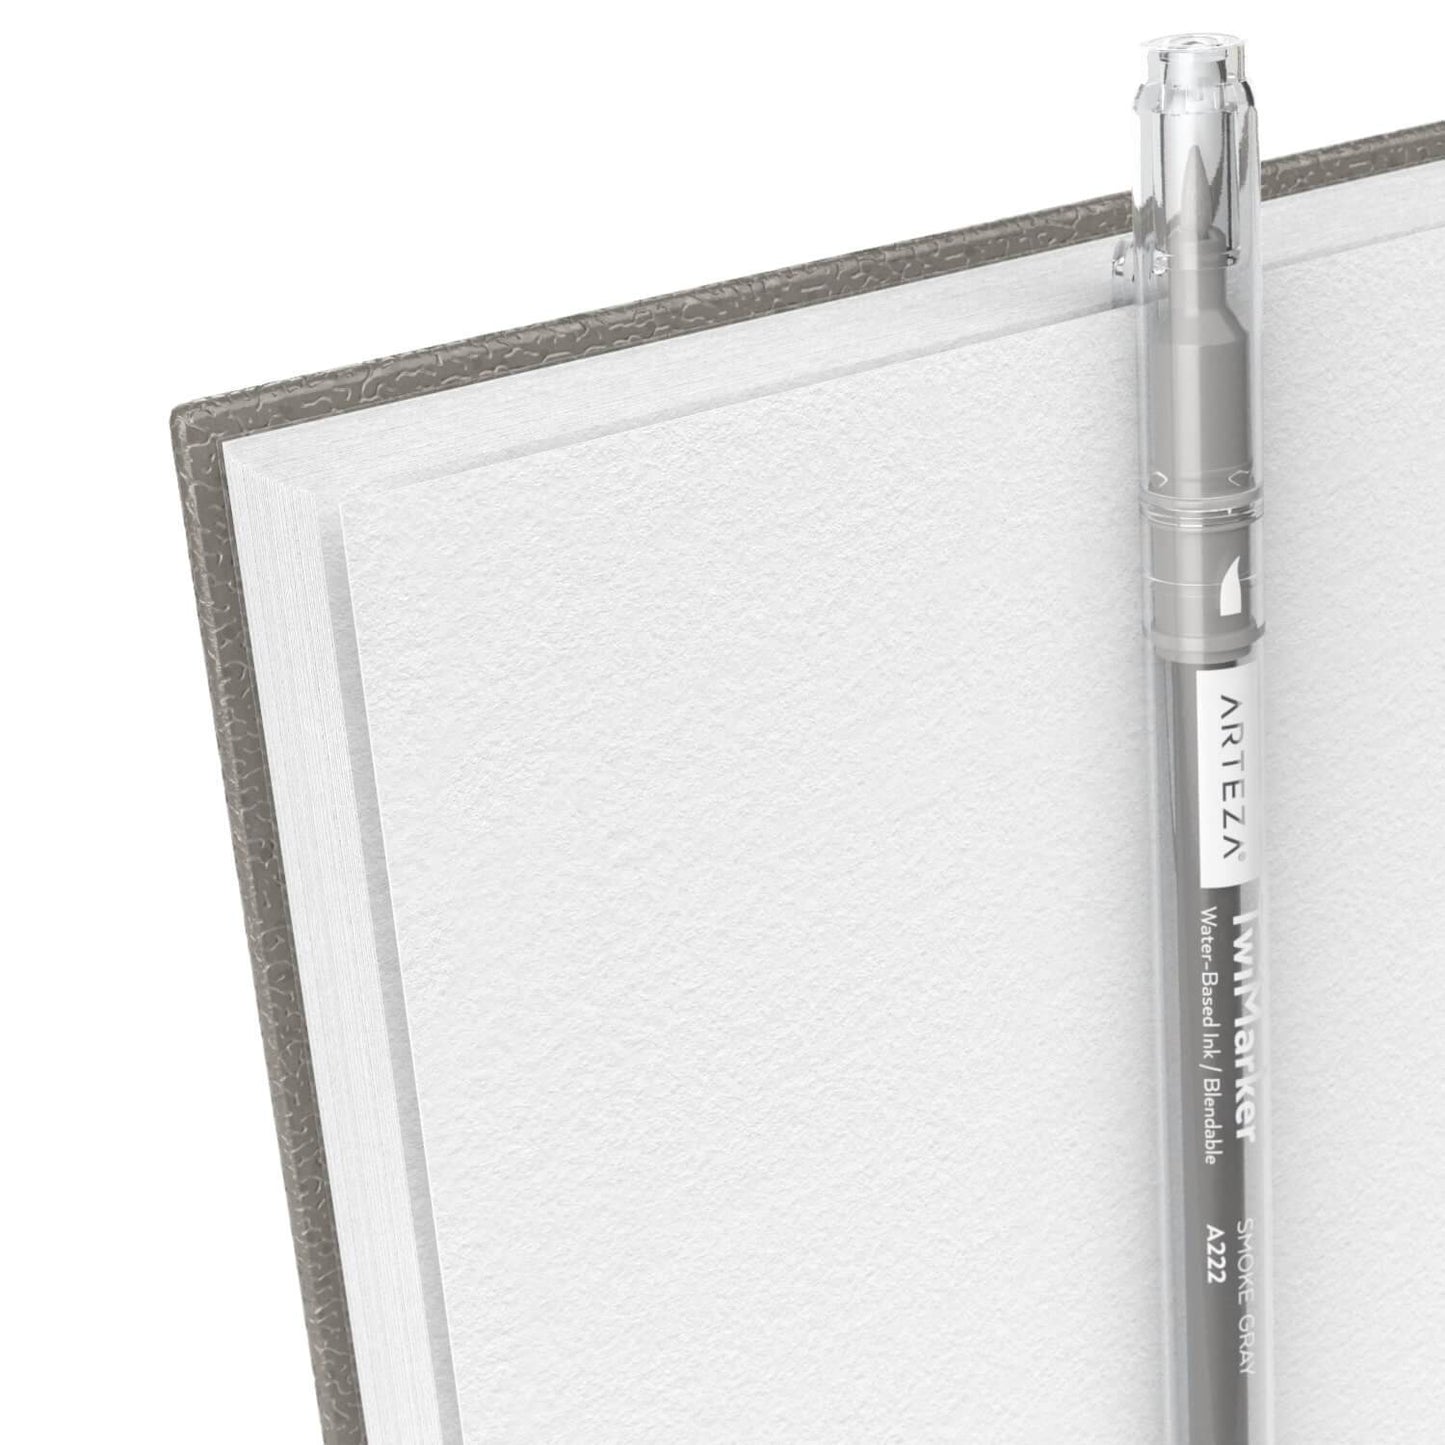 Sketchbook Spiral-Bound Hardcover Gray 9" x 12” - Pack of 2